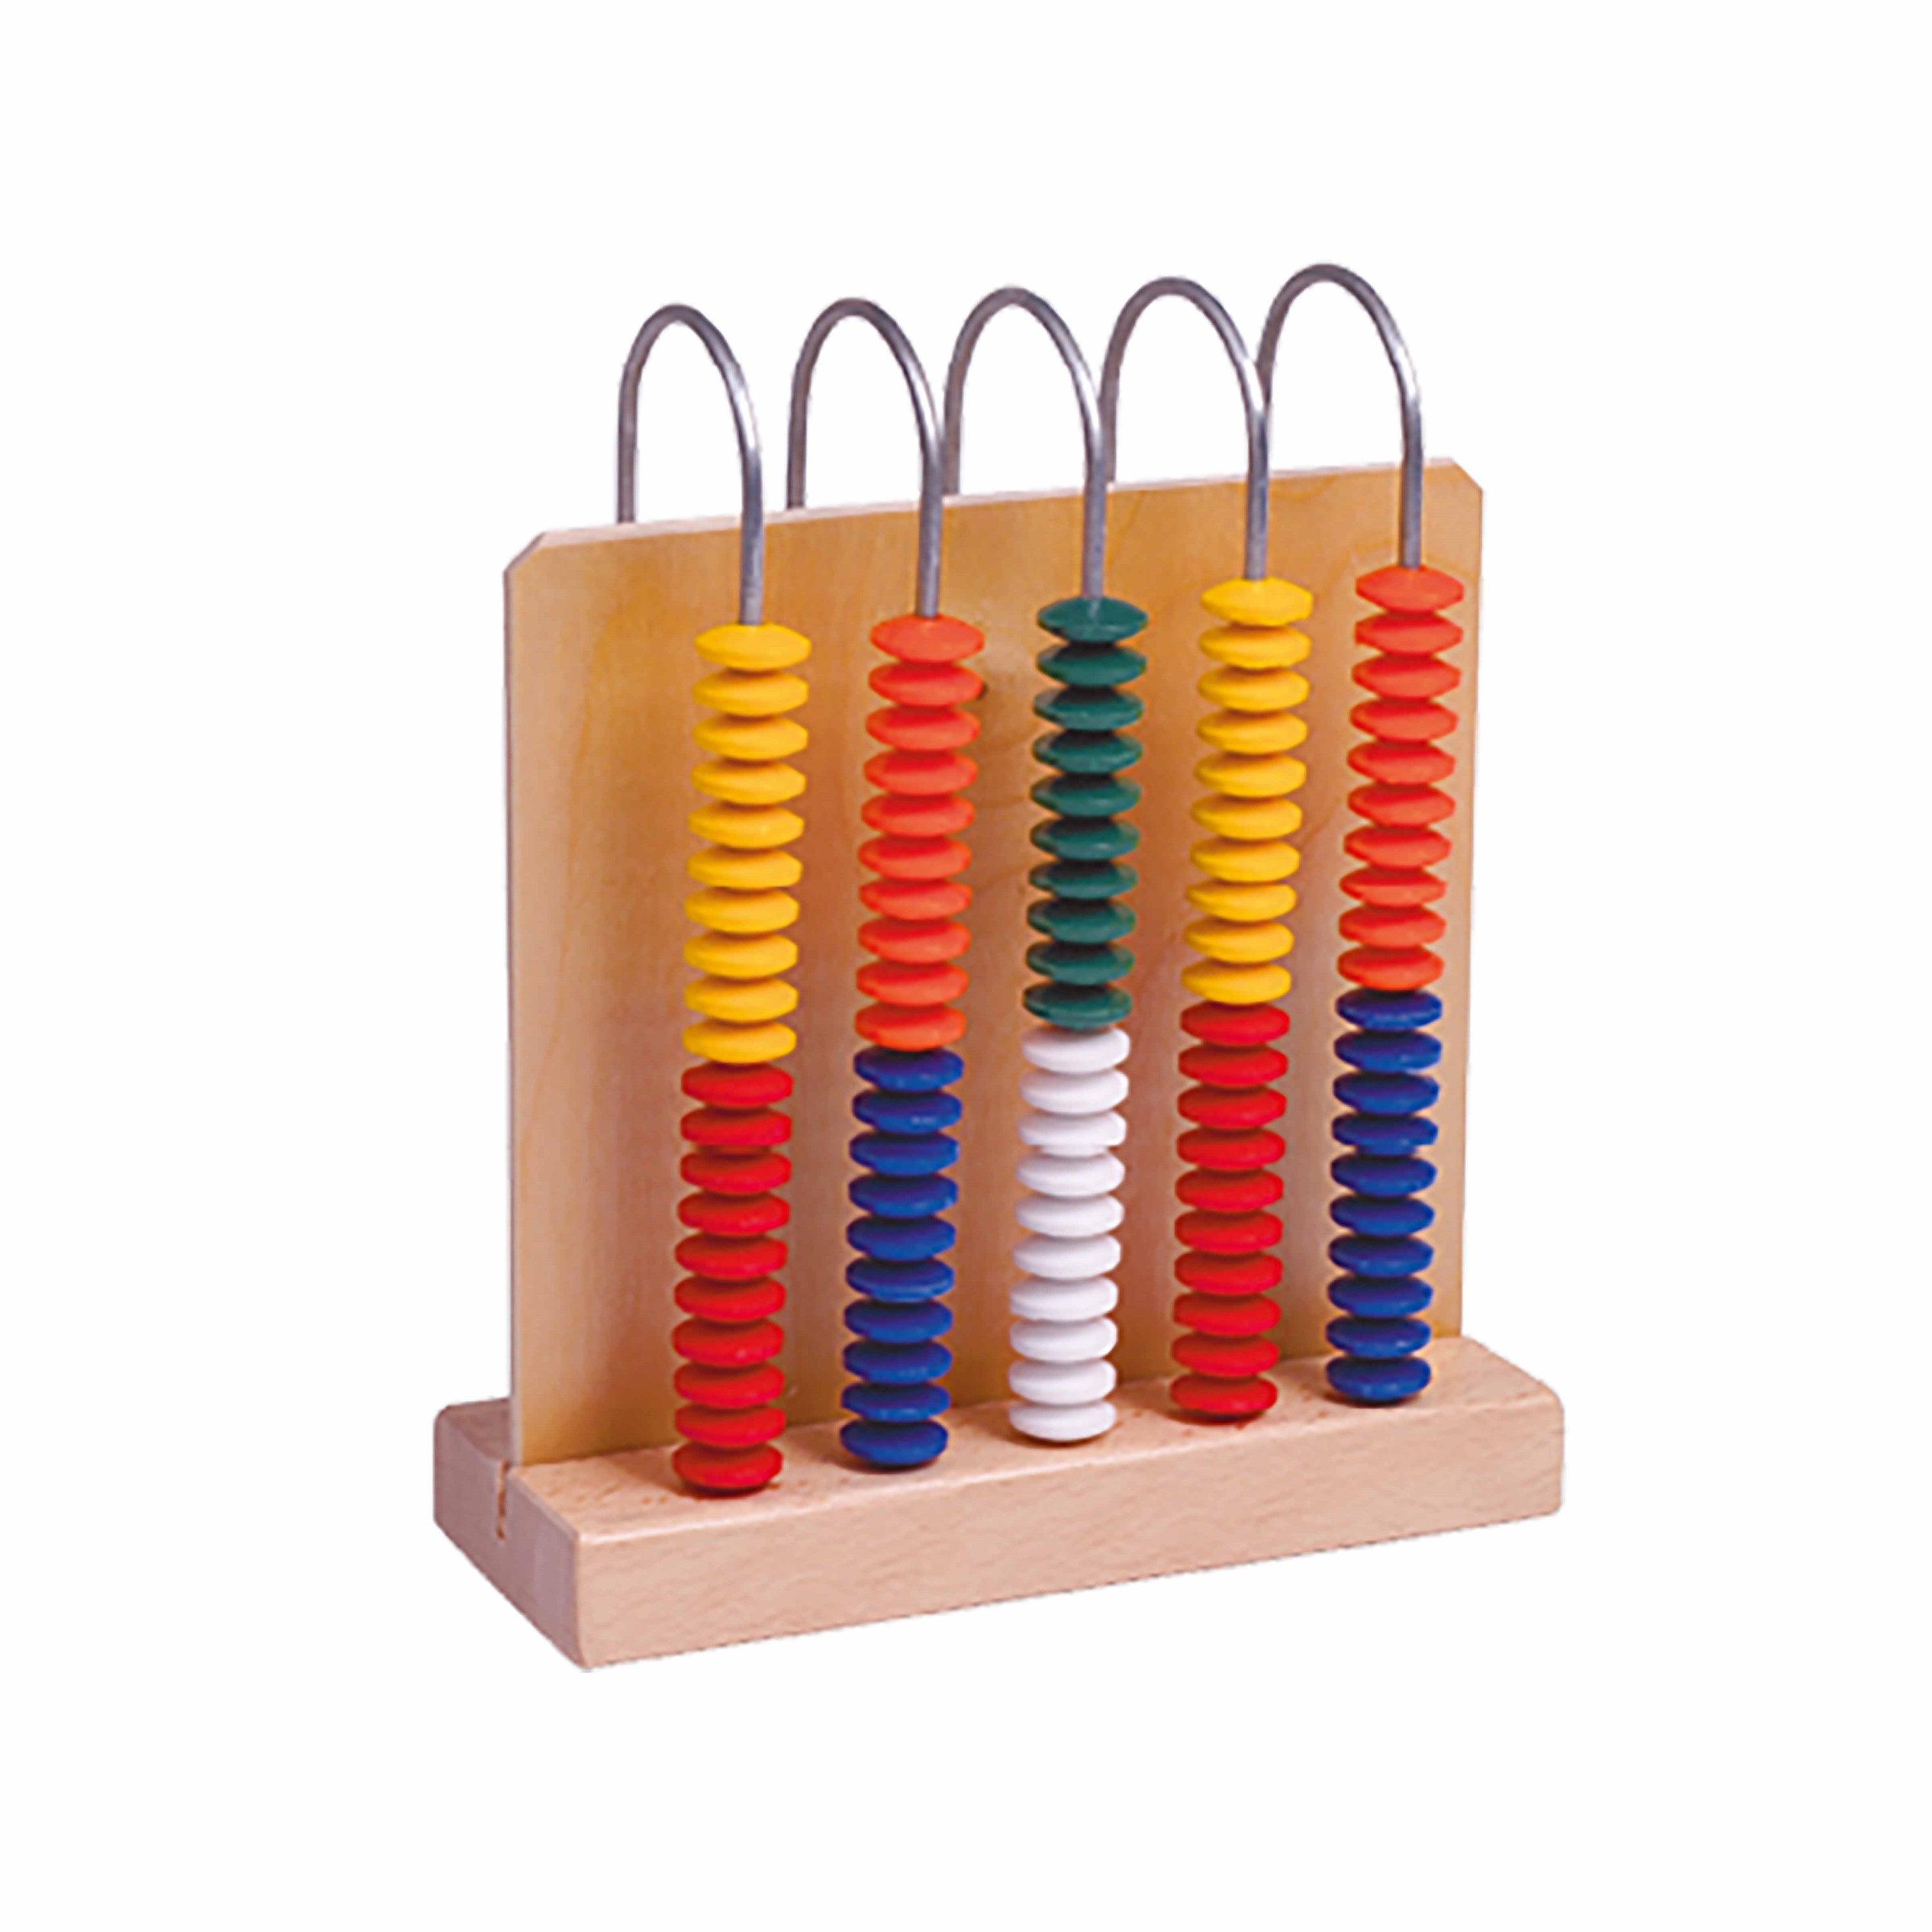 Educo: Abacus 5 x 20 Pupils abacus math aid